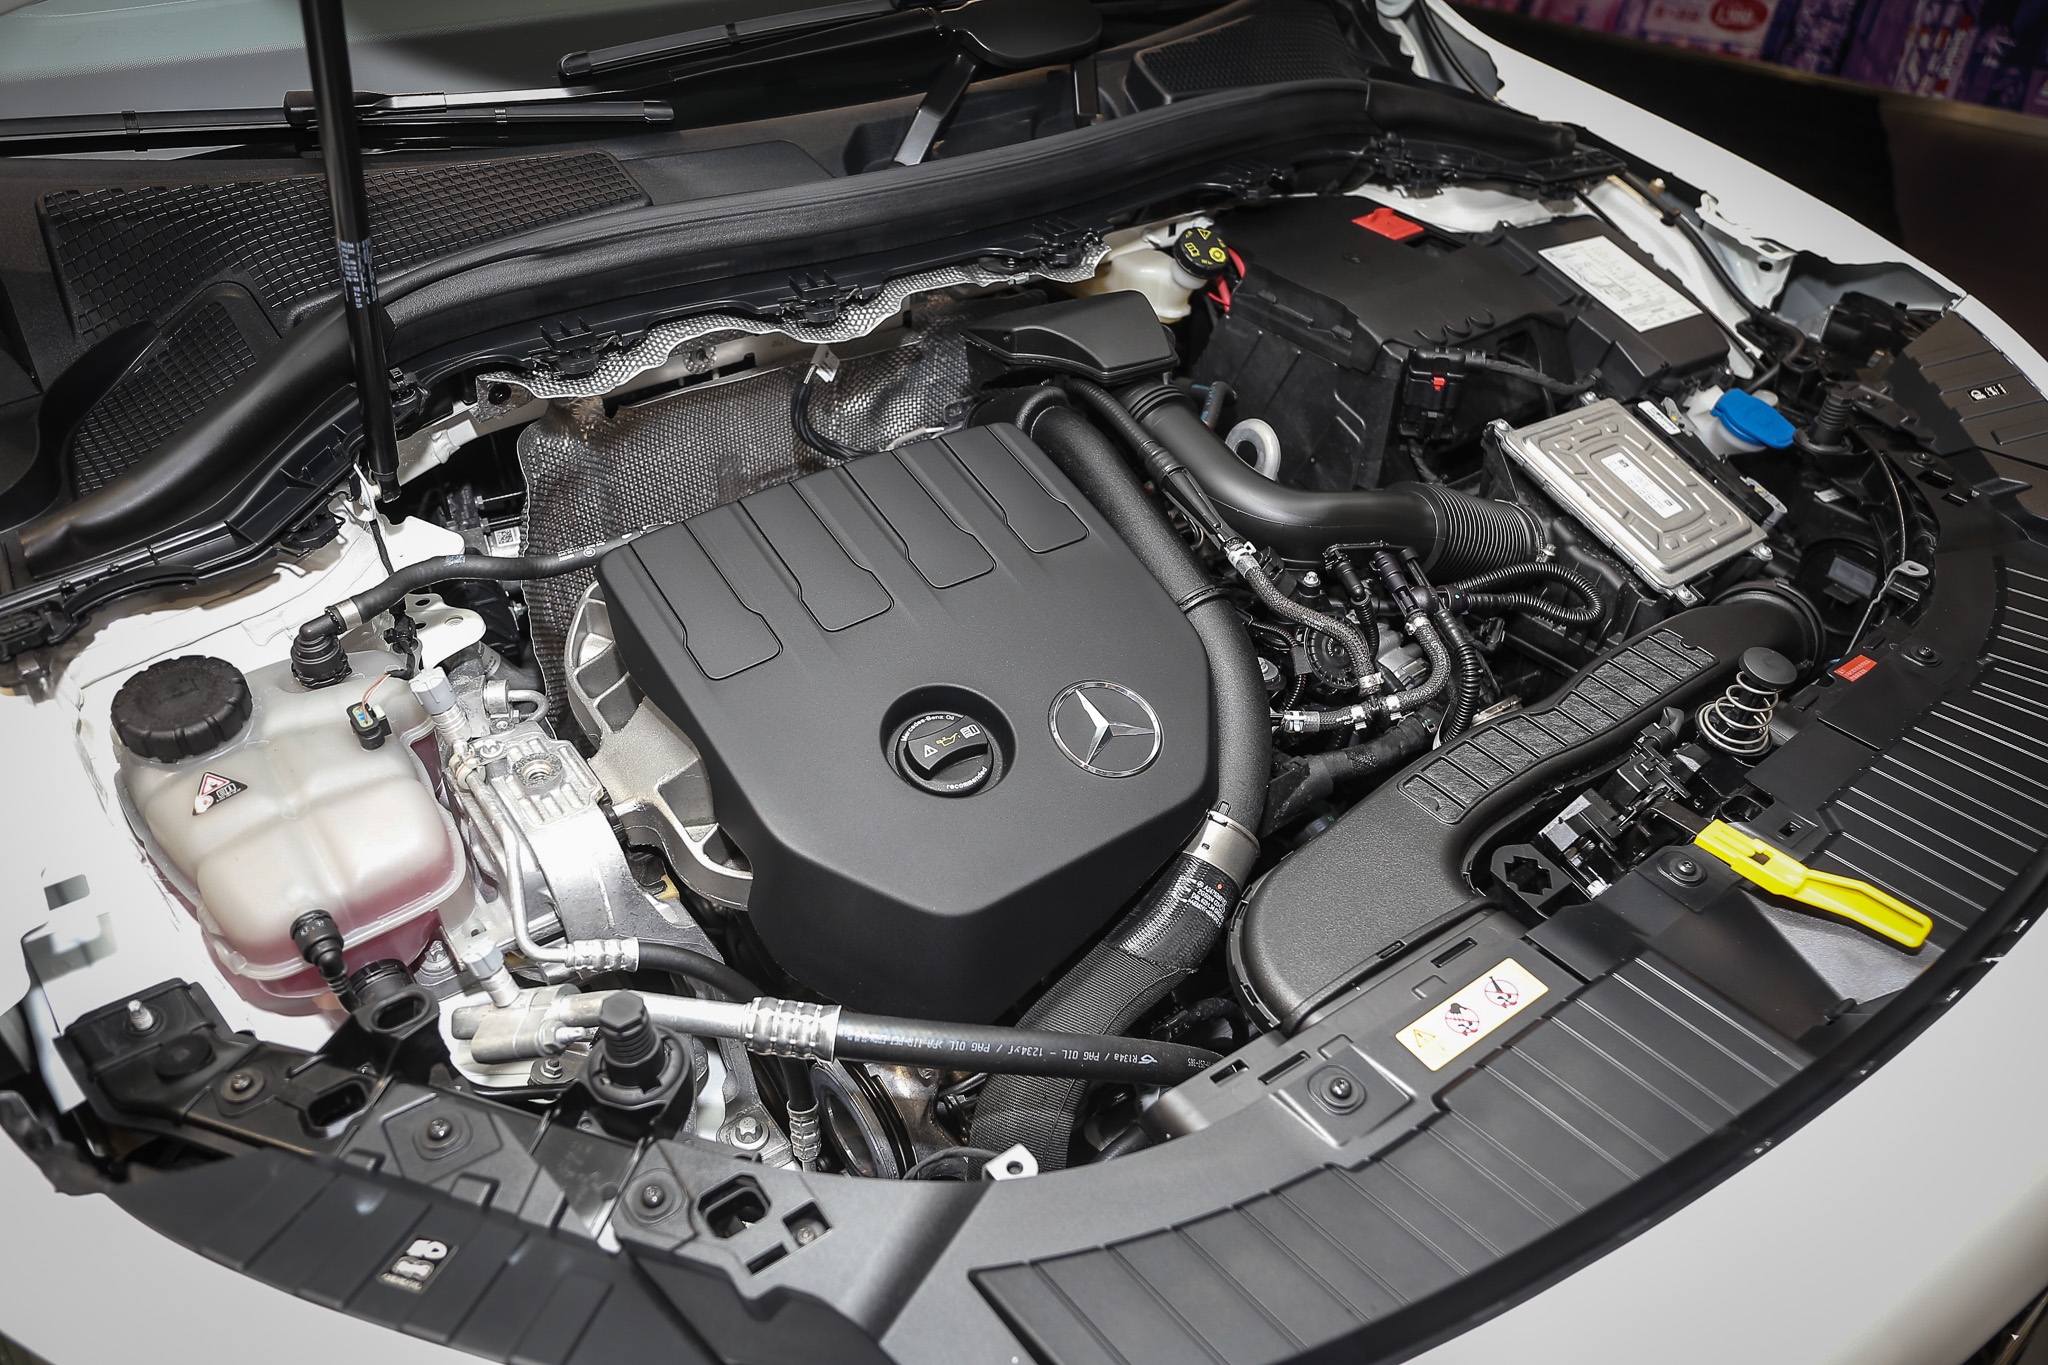 GLA 180、GLA 200 搭載 1.4 升渦輪增壓汽油引擎，分別可提供 136 hp 與 163 hp 的動力輸出，皆搭配 DCT 雙離合器七速自手排變速箱。